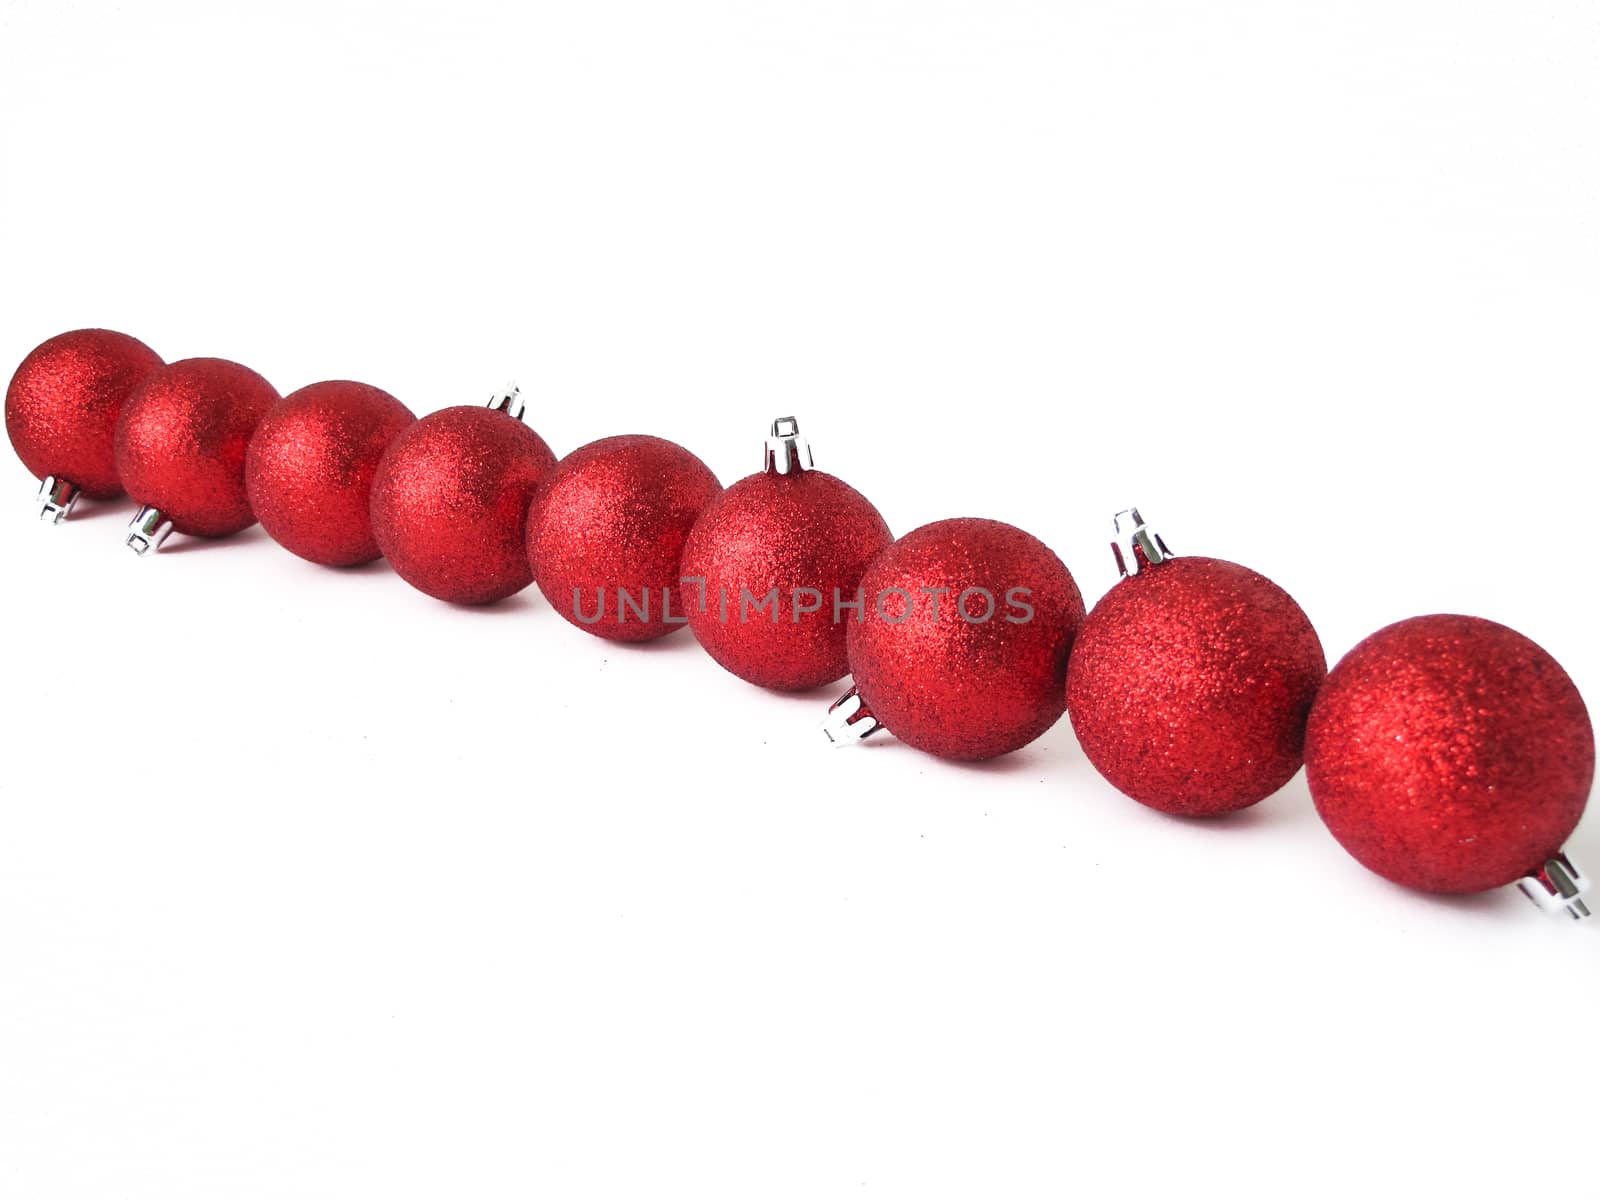 Christmas balls by rodakm